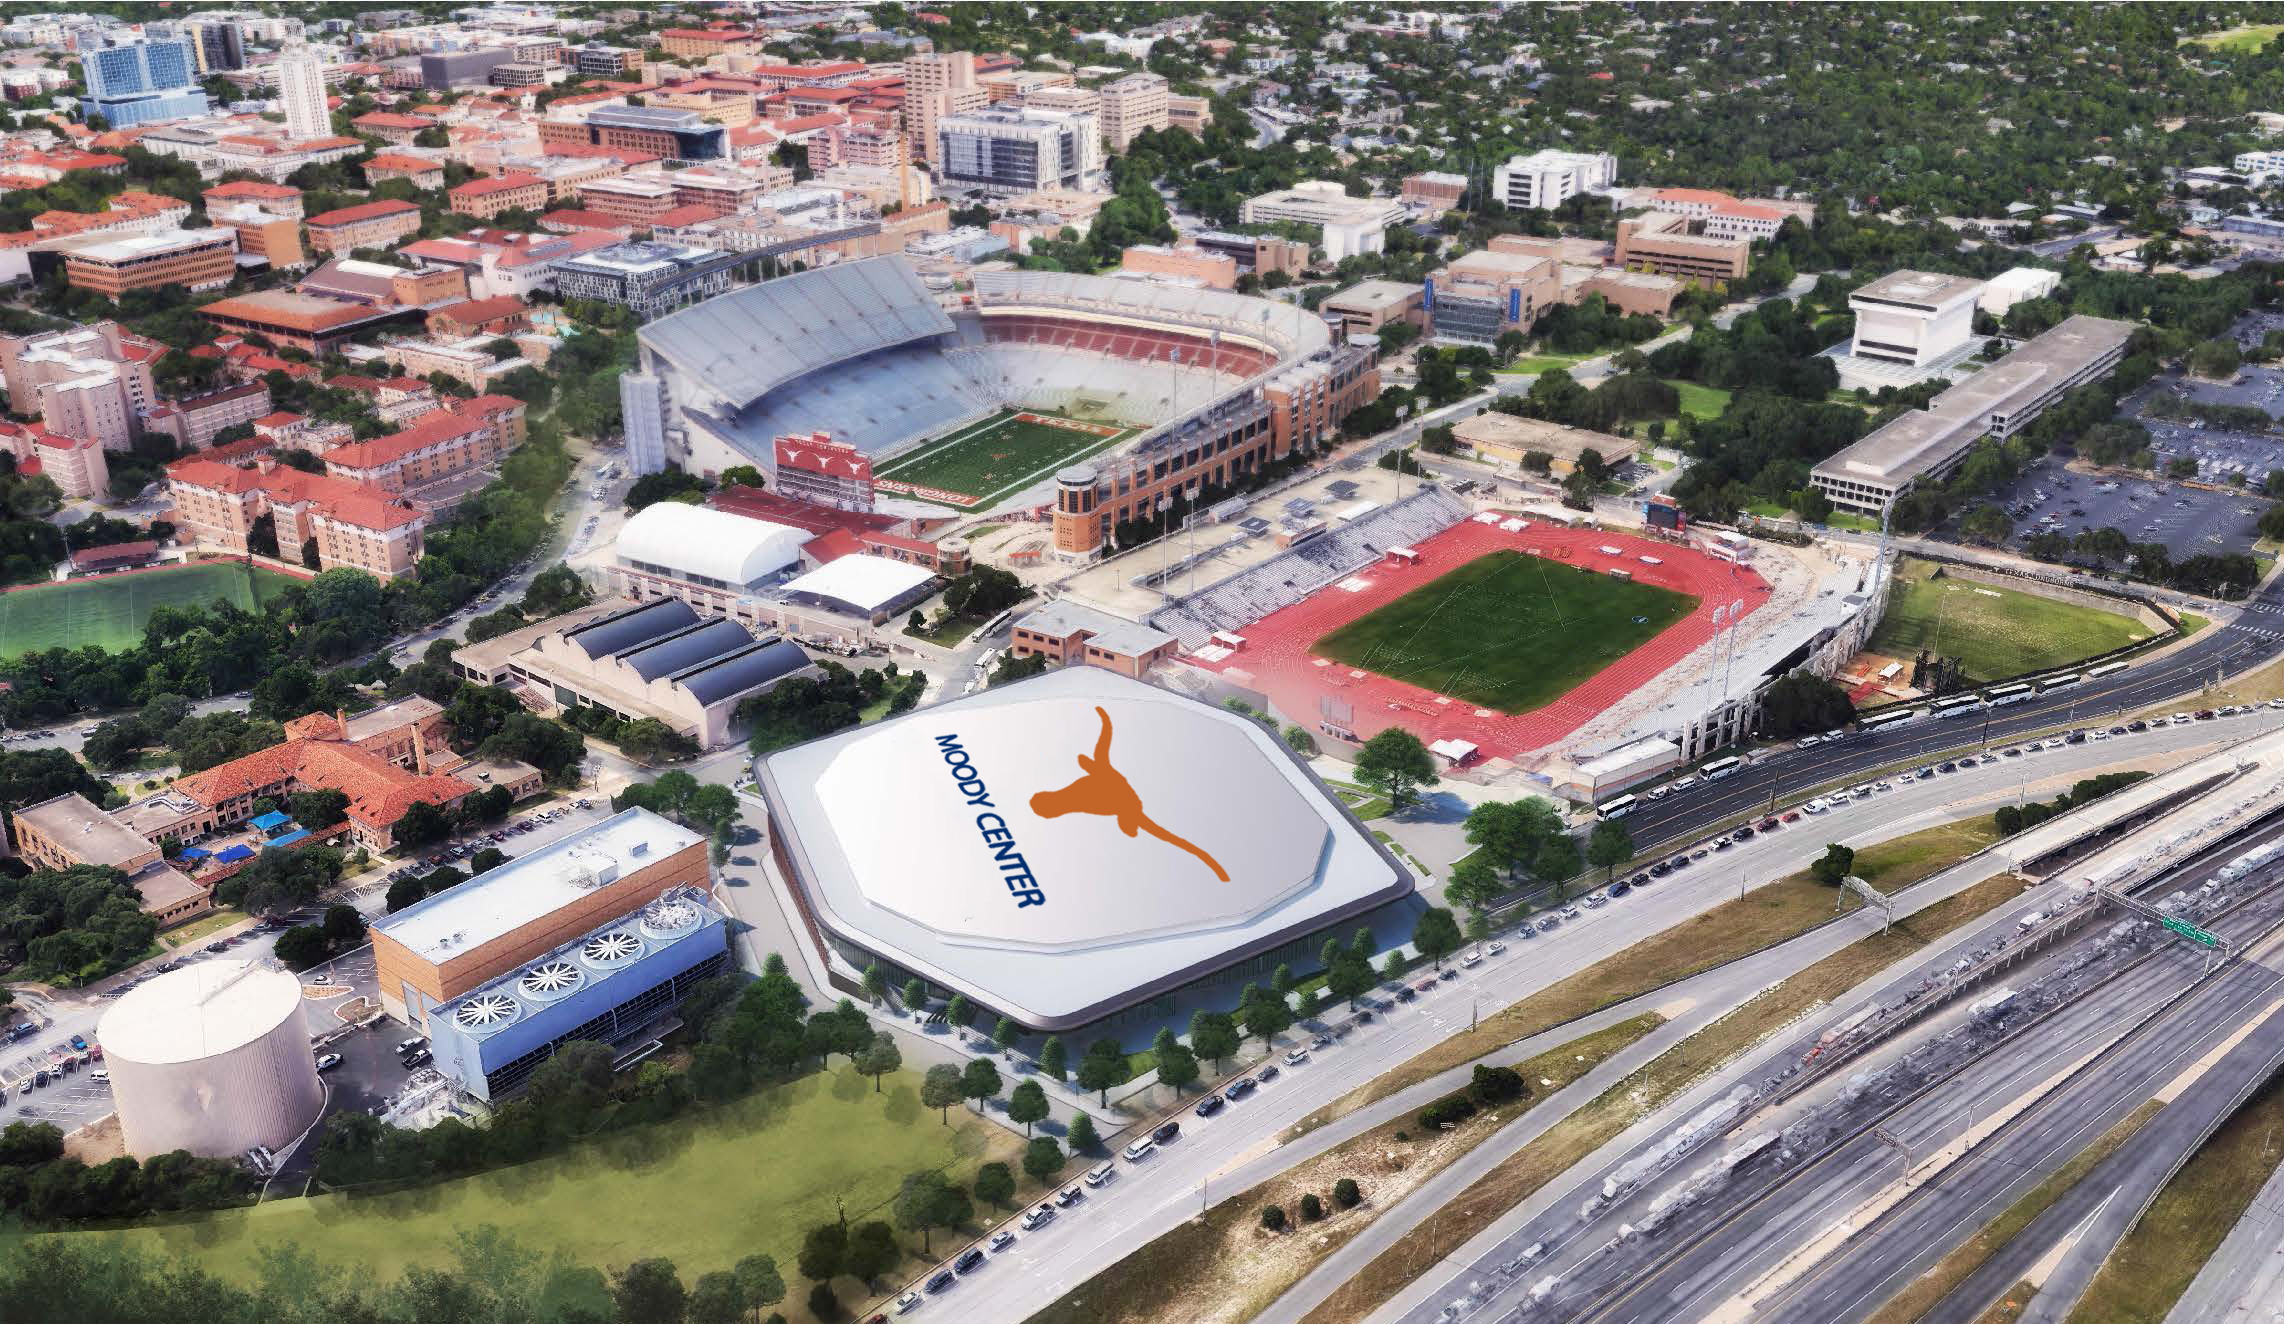 World-Class UT Basketball Arena Will Host Longhorns, Benefit Austin  Community